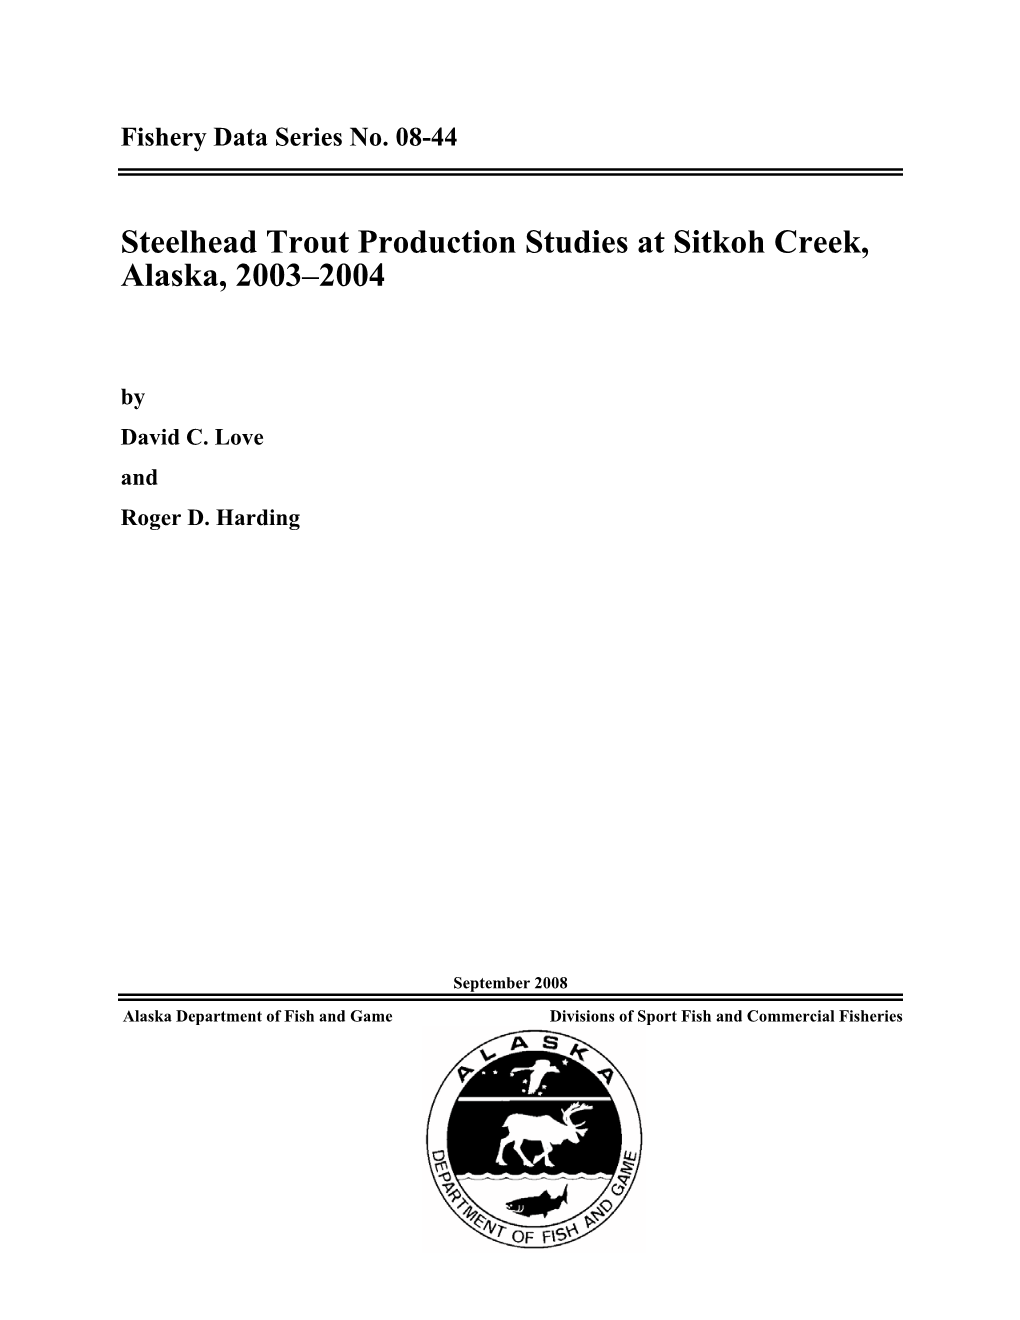 Steelhead Trout Production Studies at Sitkoh Creek, Alaska, 2003–2004. Alaska Department of Fish and Game, Fishery Data Series No